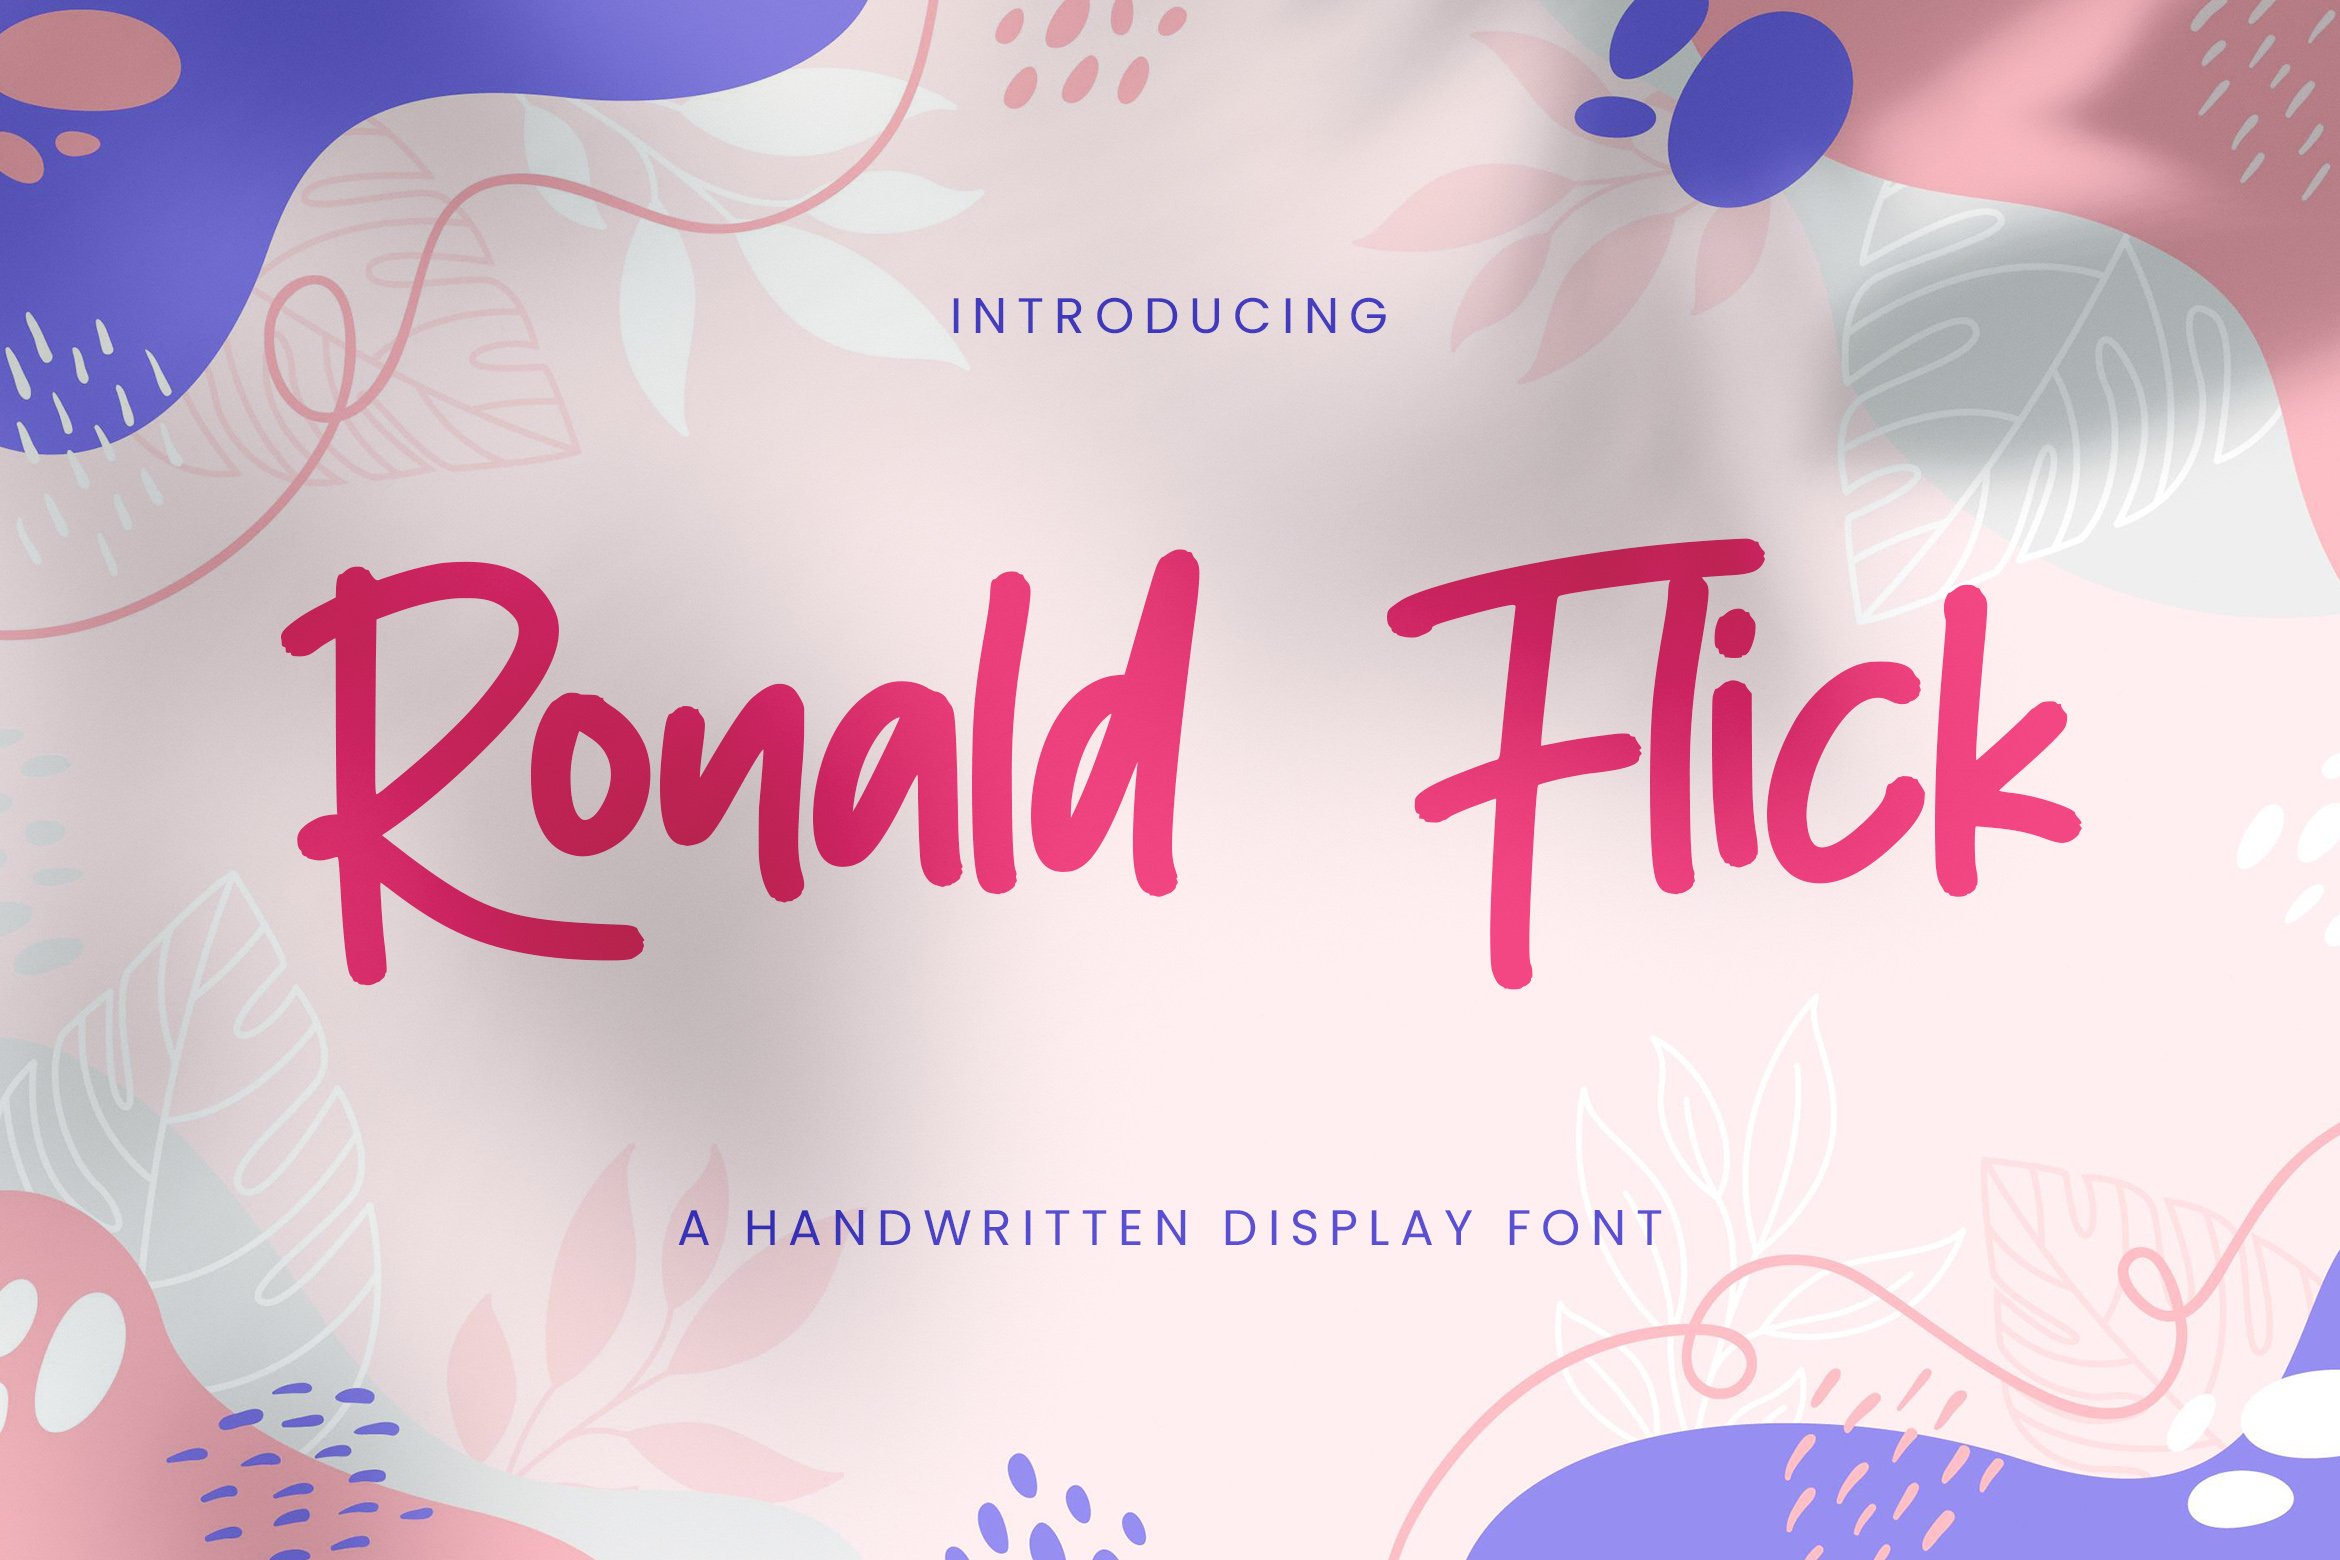 Ronald Flick - Handwritten Font cover image.